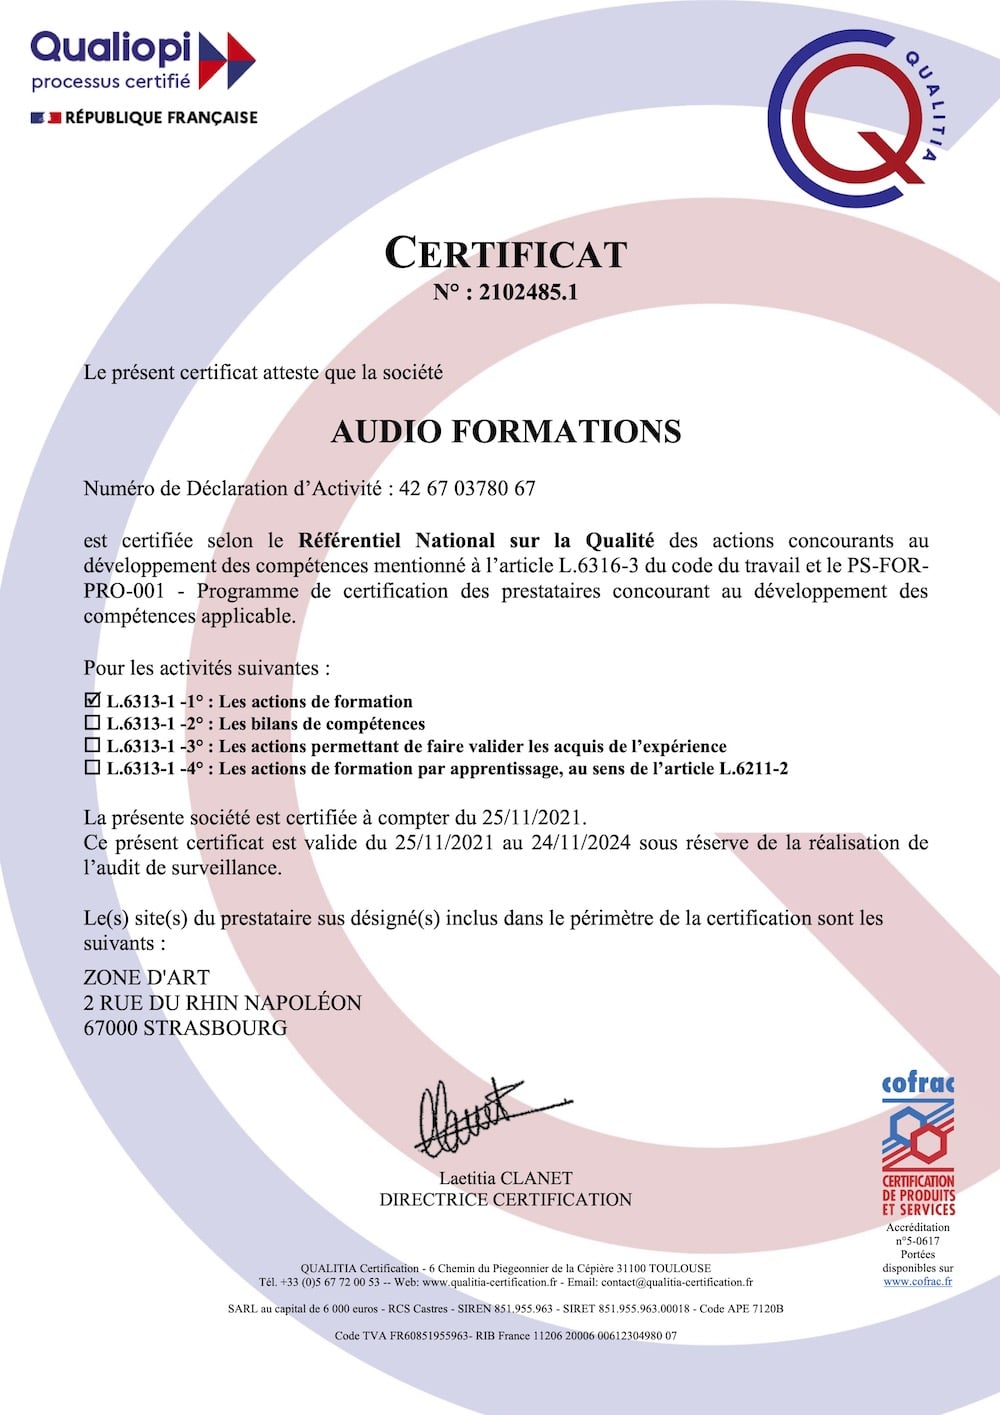 Certificat de conformité Qualiopi - Audio Formations